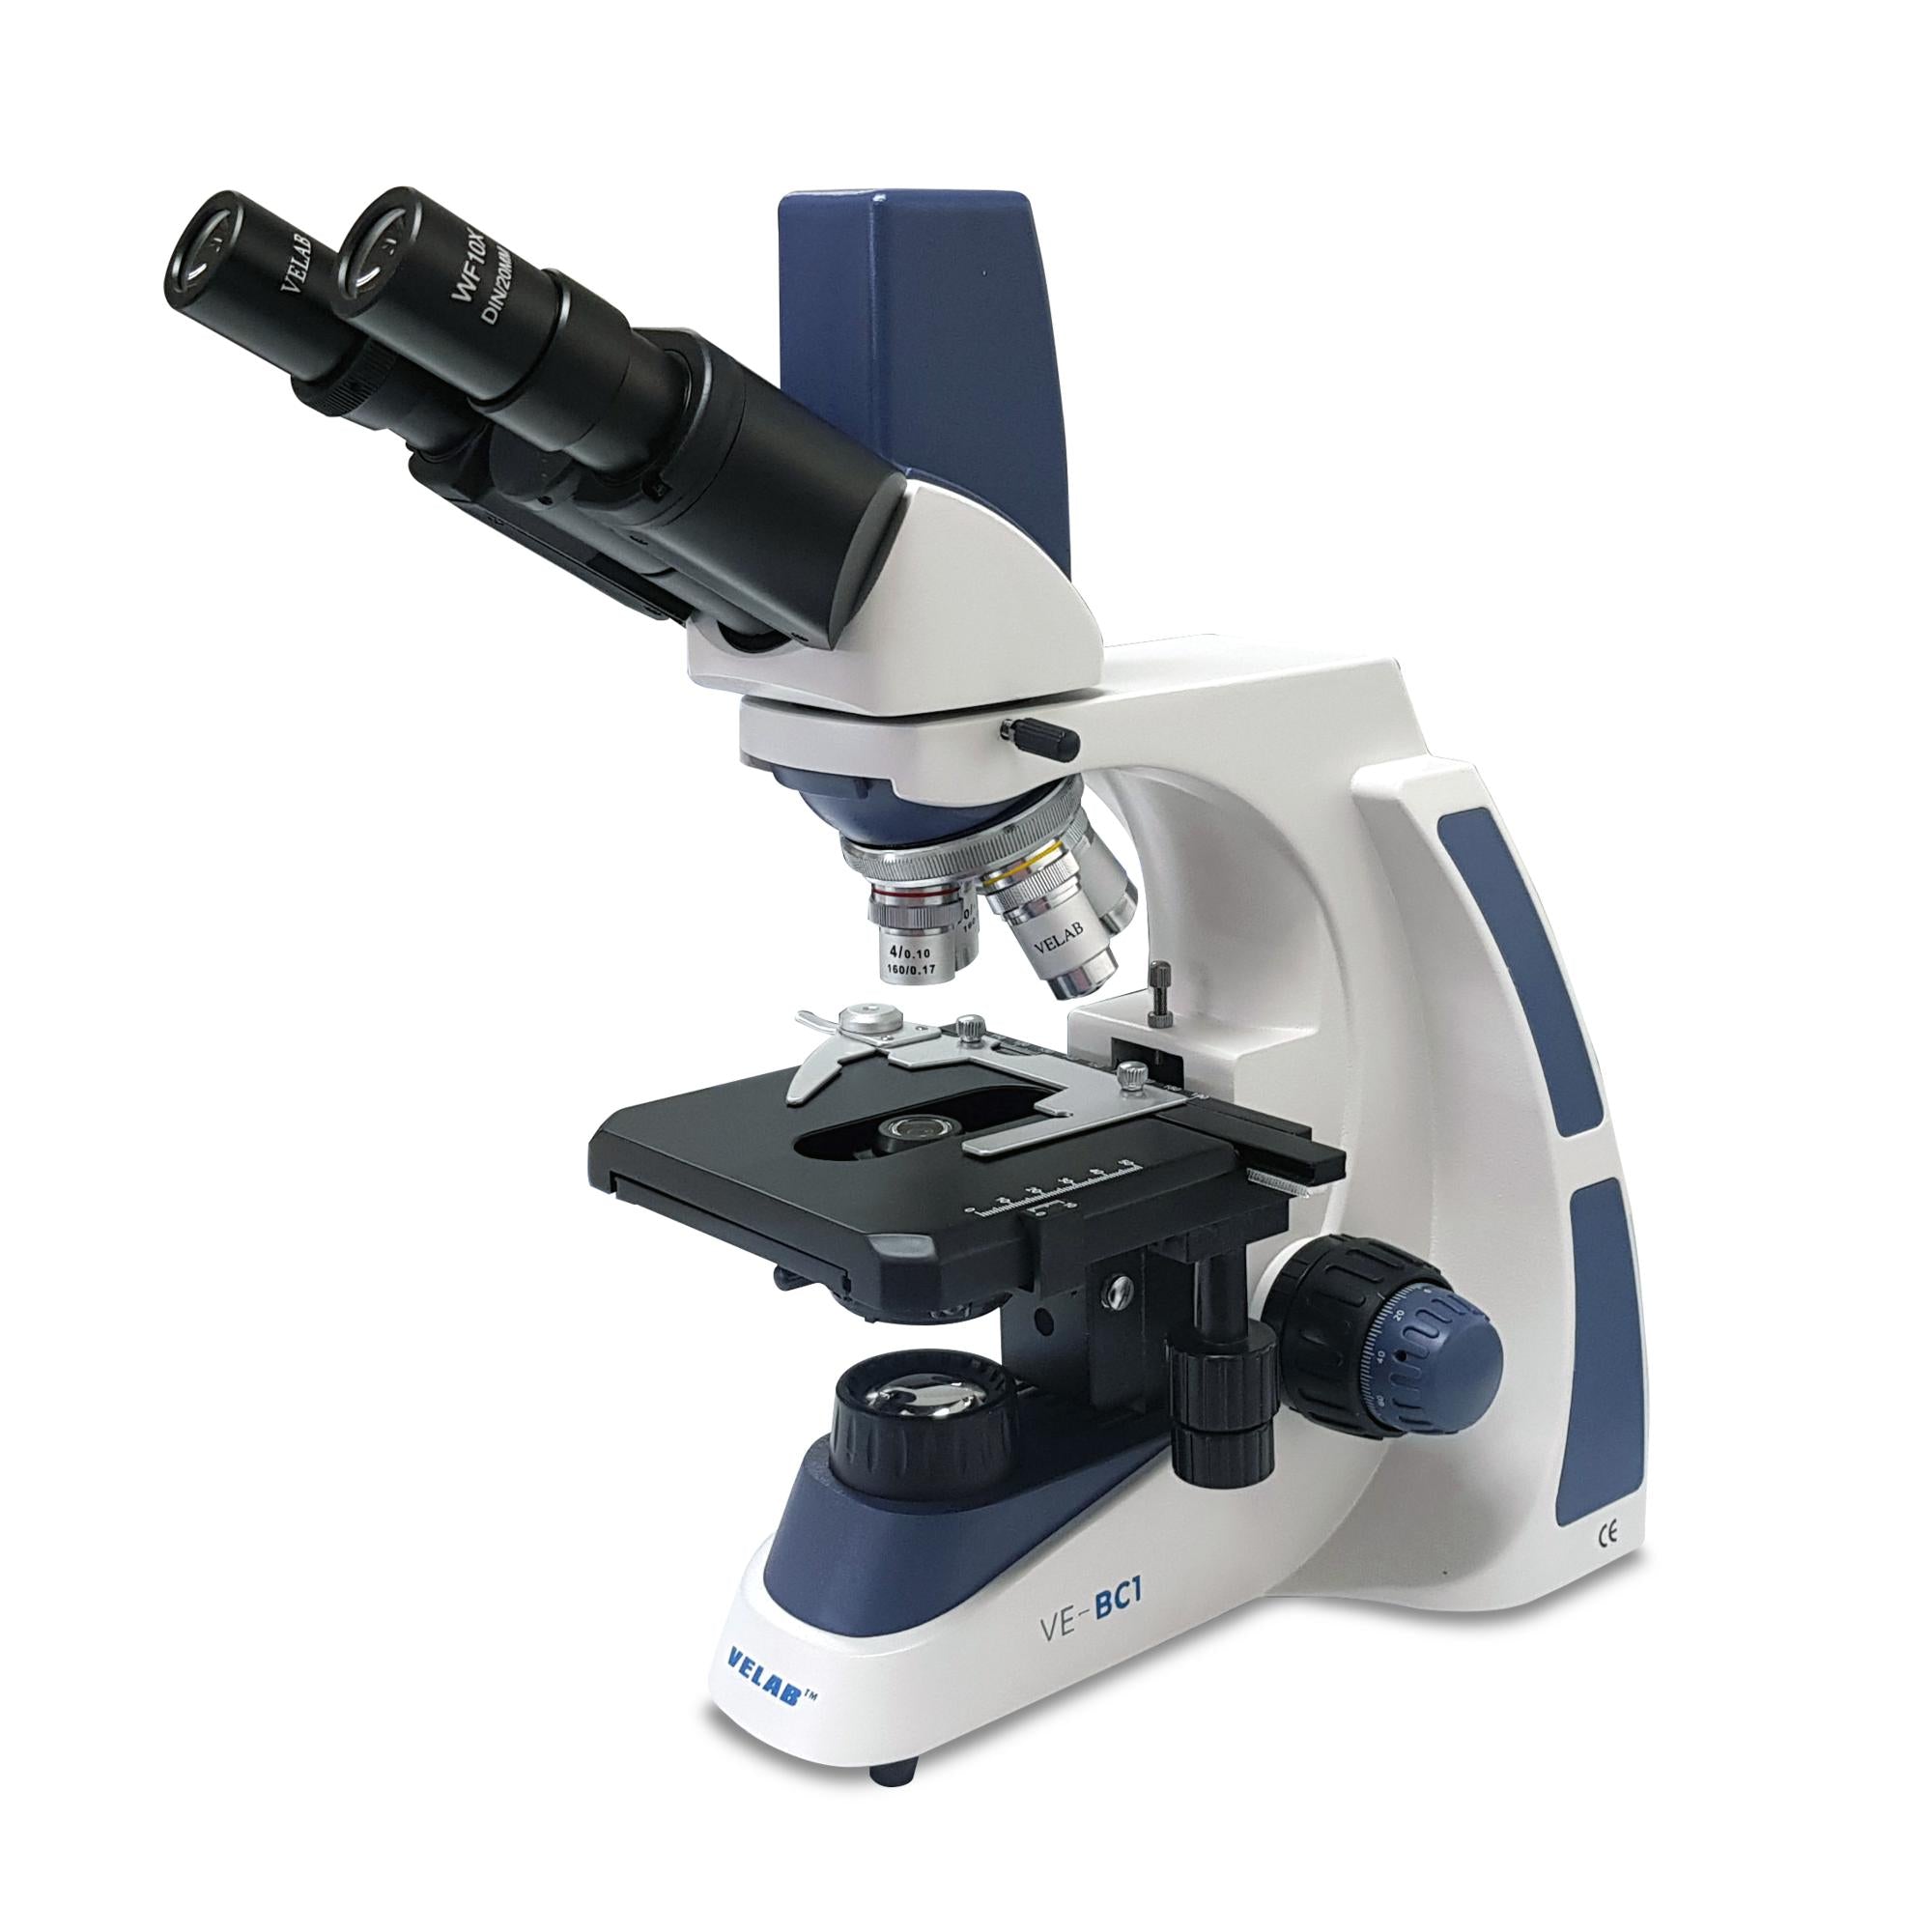 VELAB Binocular Microscope with Integrated 3.0 MP Digital Camera